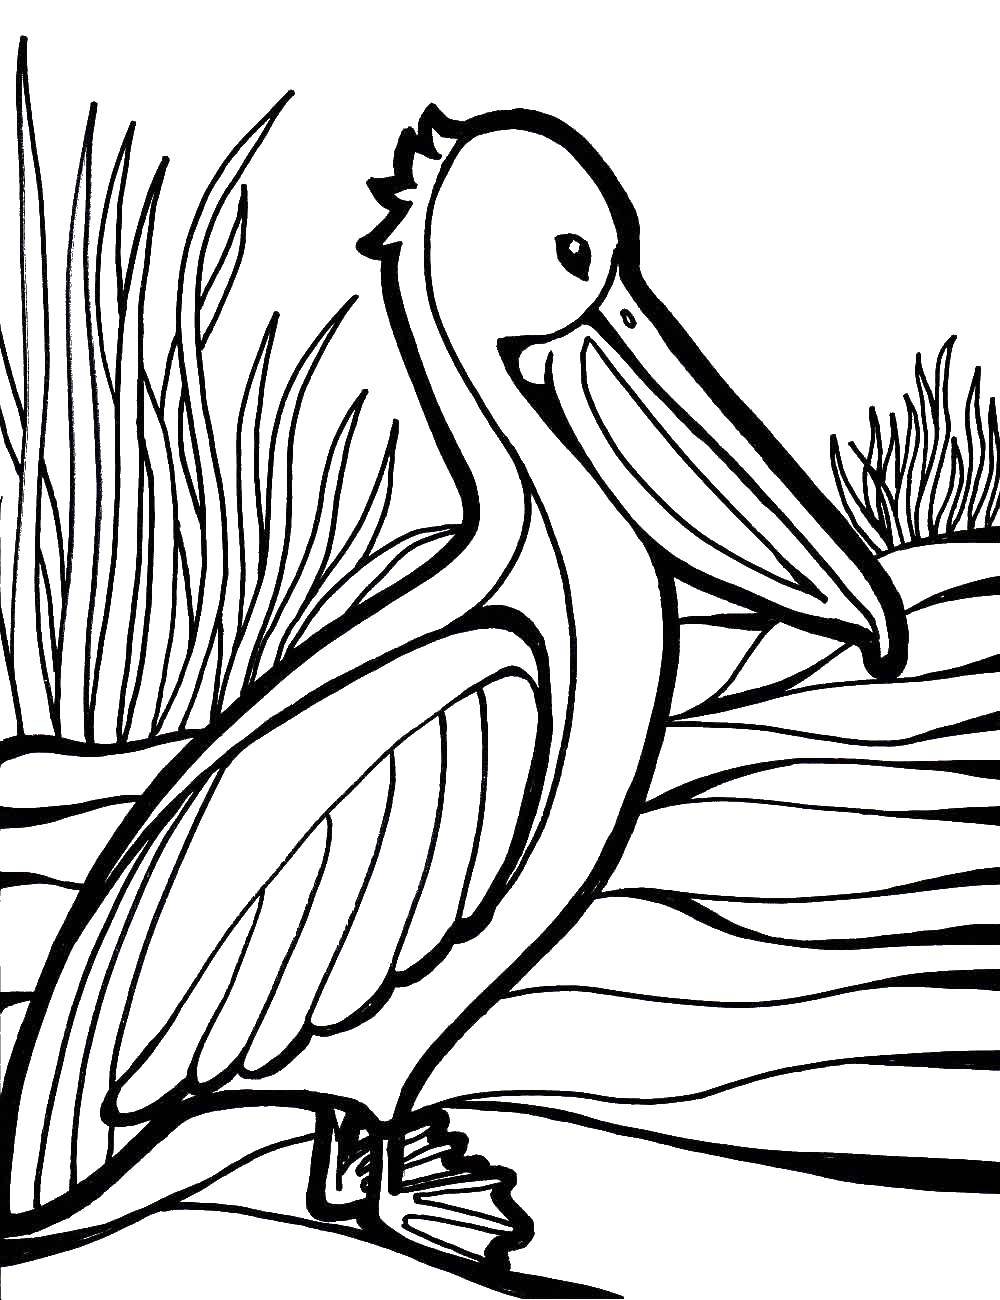 Coloring Pelican. Category Animals. Tags:  Pelican, bird.